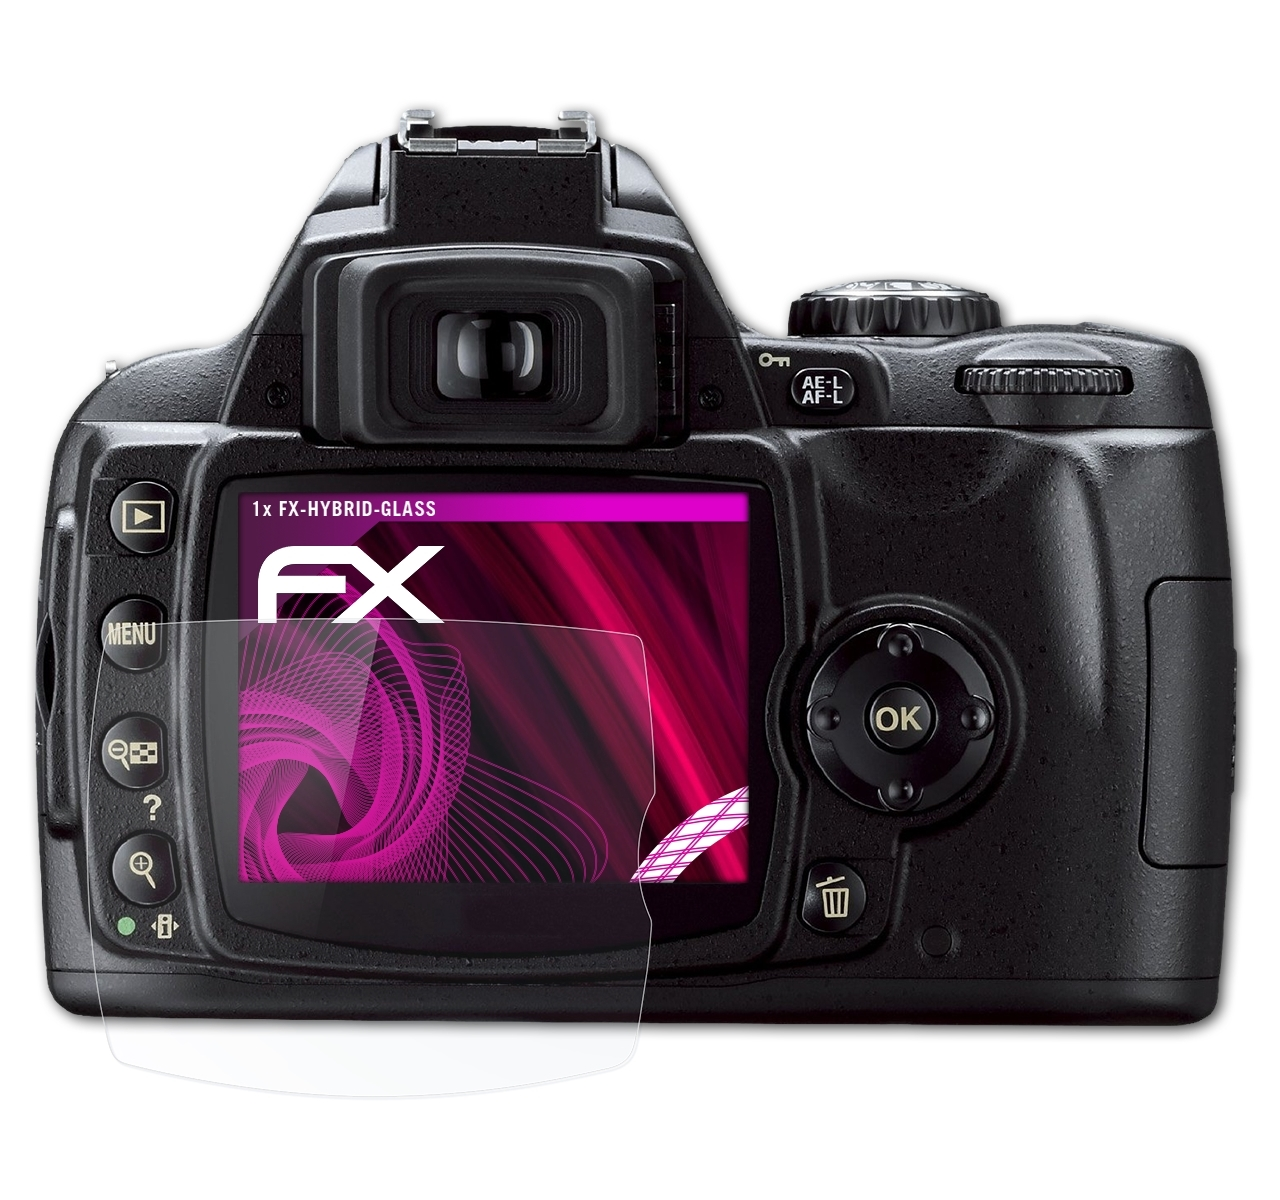 D40X) Nikon FX-Hybrid-Glass Schutzglas(für ATFOLIX